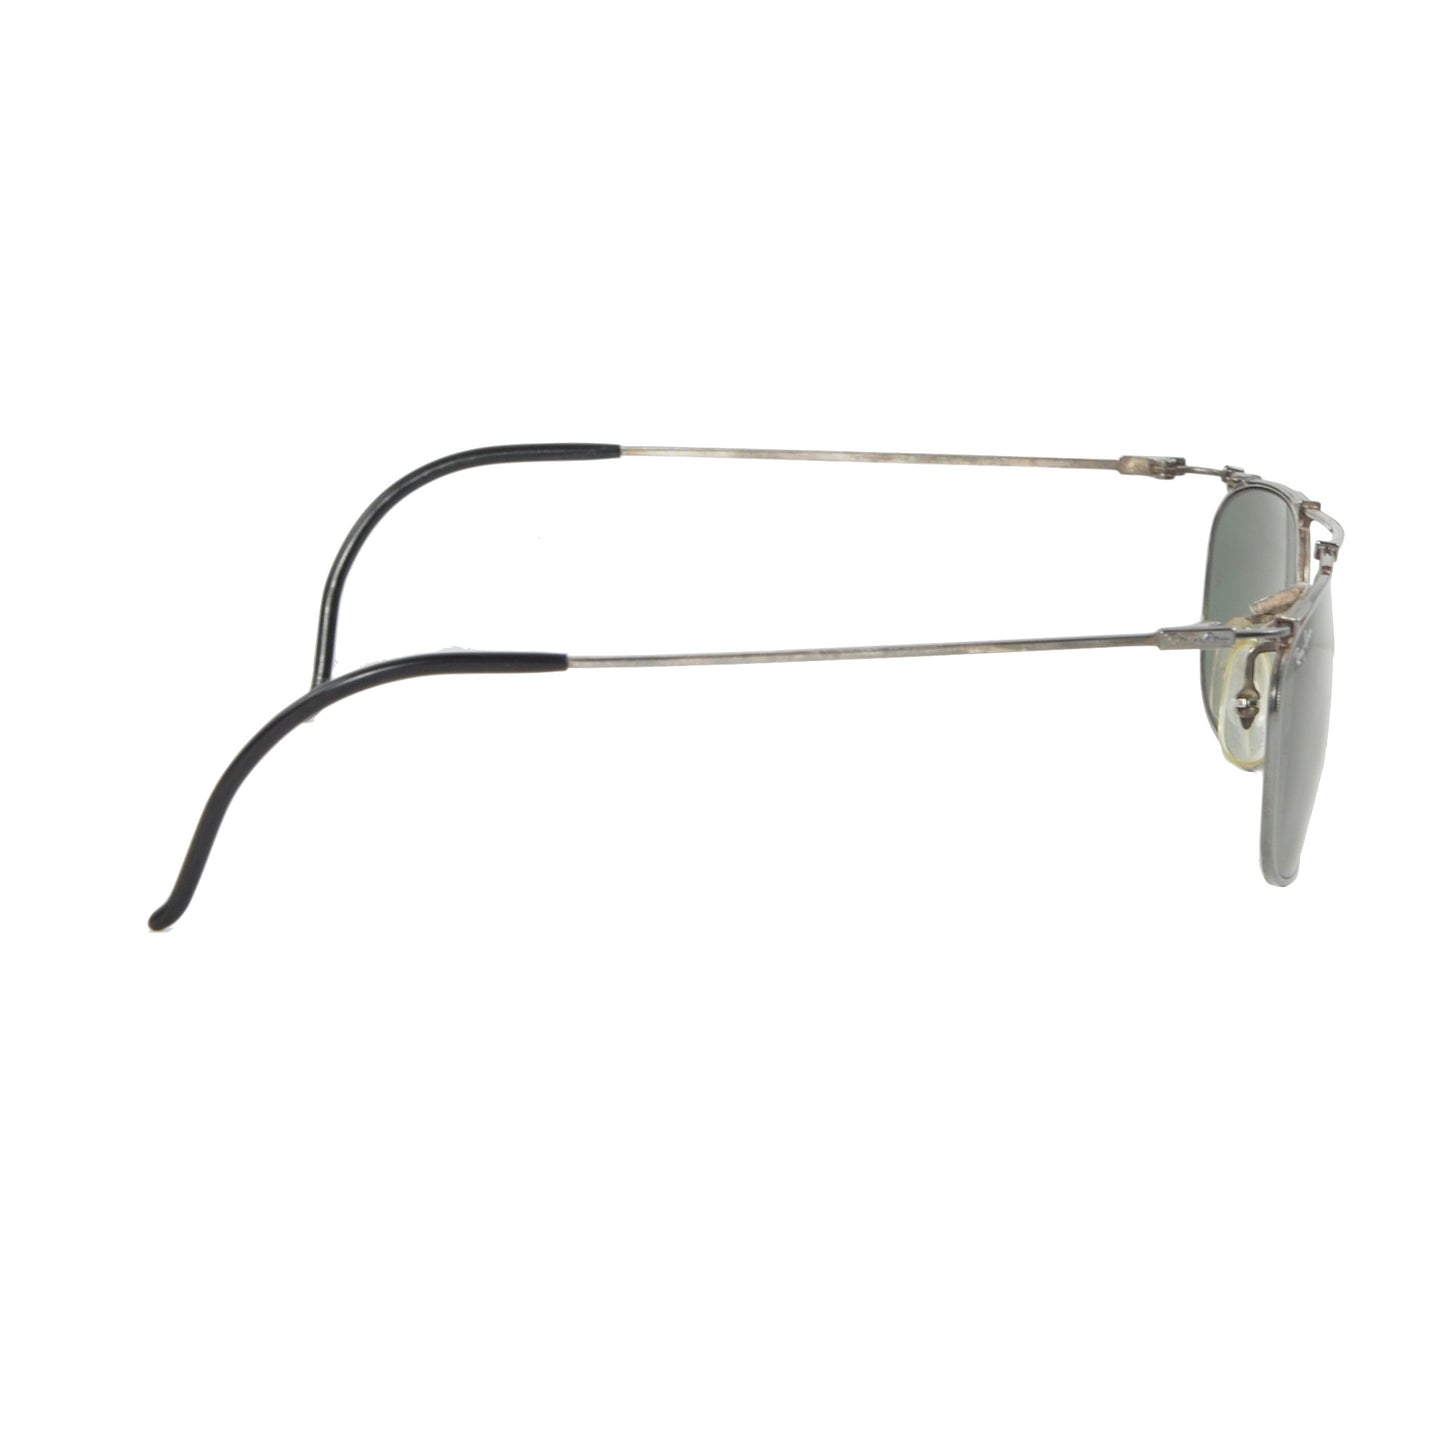 Bausch & Lomb Ray-Ban Sunglasses W1532 - Steel Grey